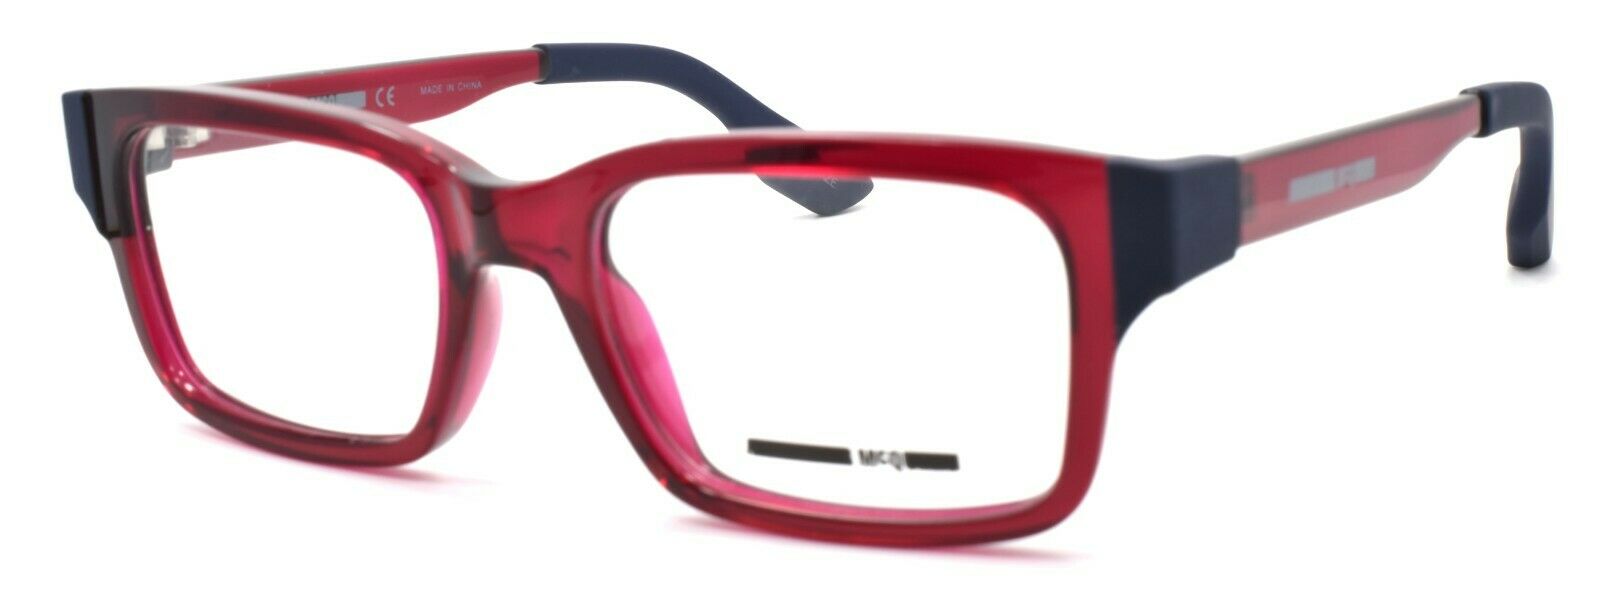 1-McQ Alexander McQueen MQ0016O 003 Unisex Eyeglasses 51-19-140 Transparent Pink-889652002491-IKSpecs